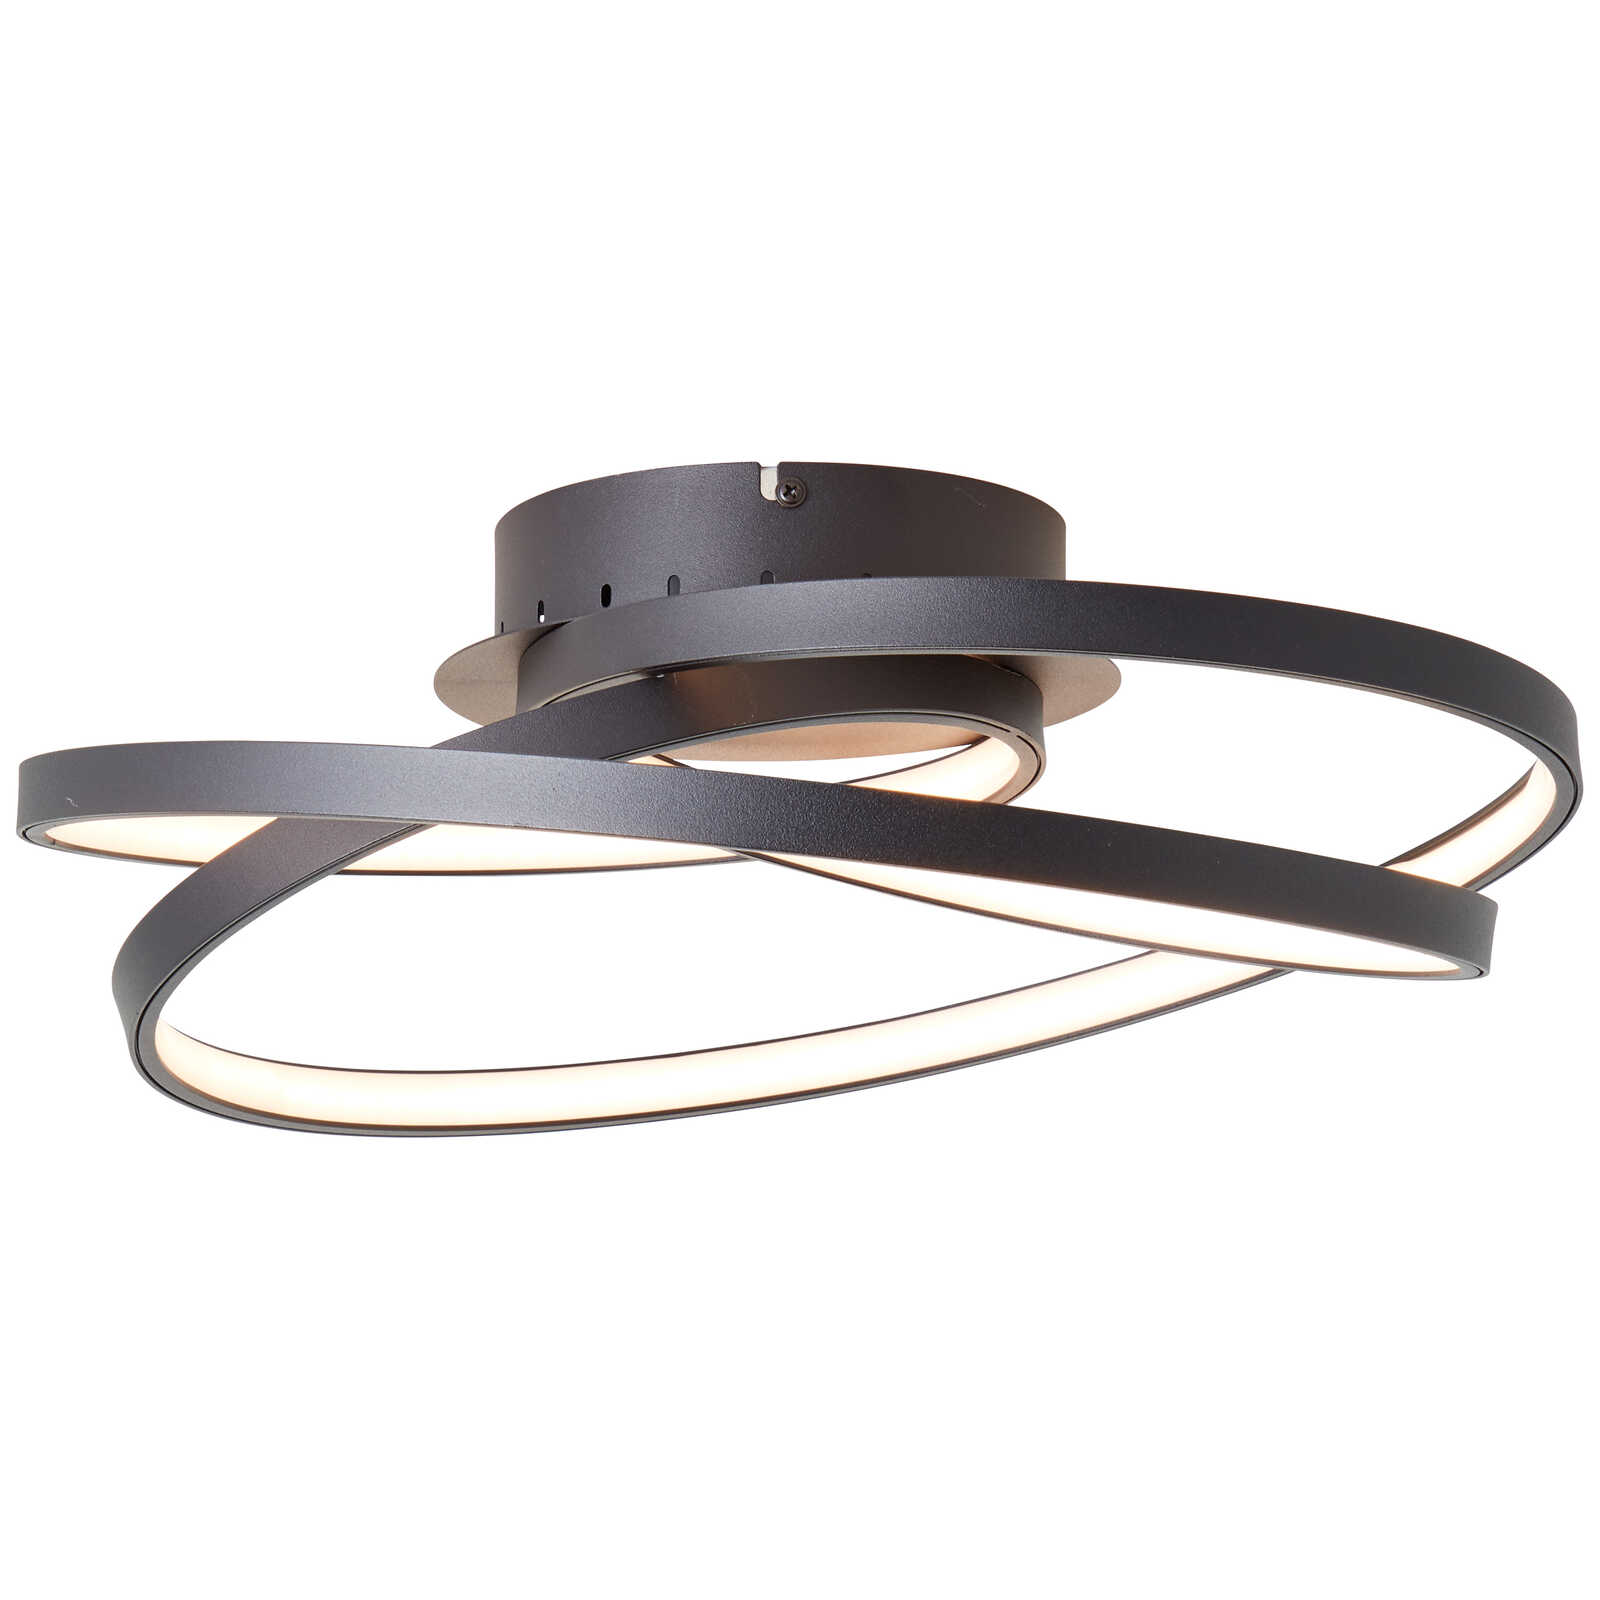             Metalen plafondlamp - Kilian 1 - Zwart
        